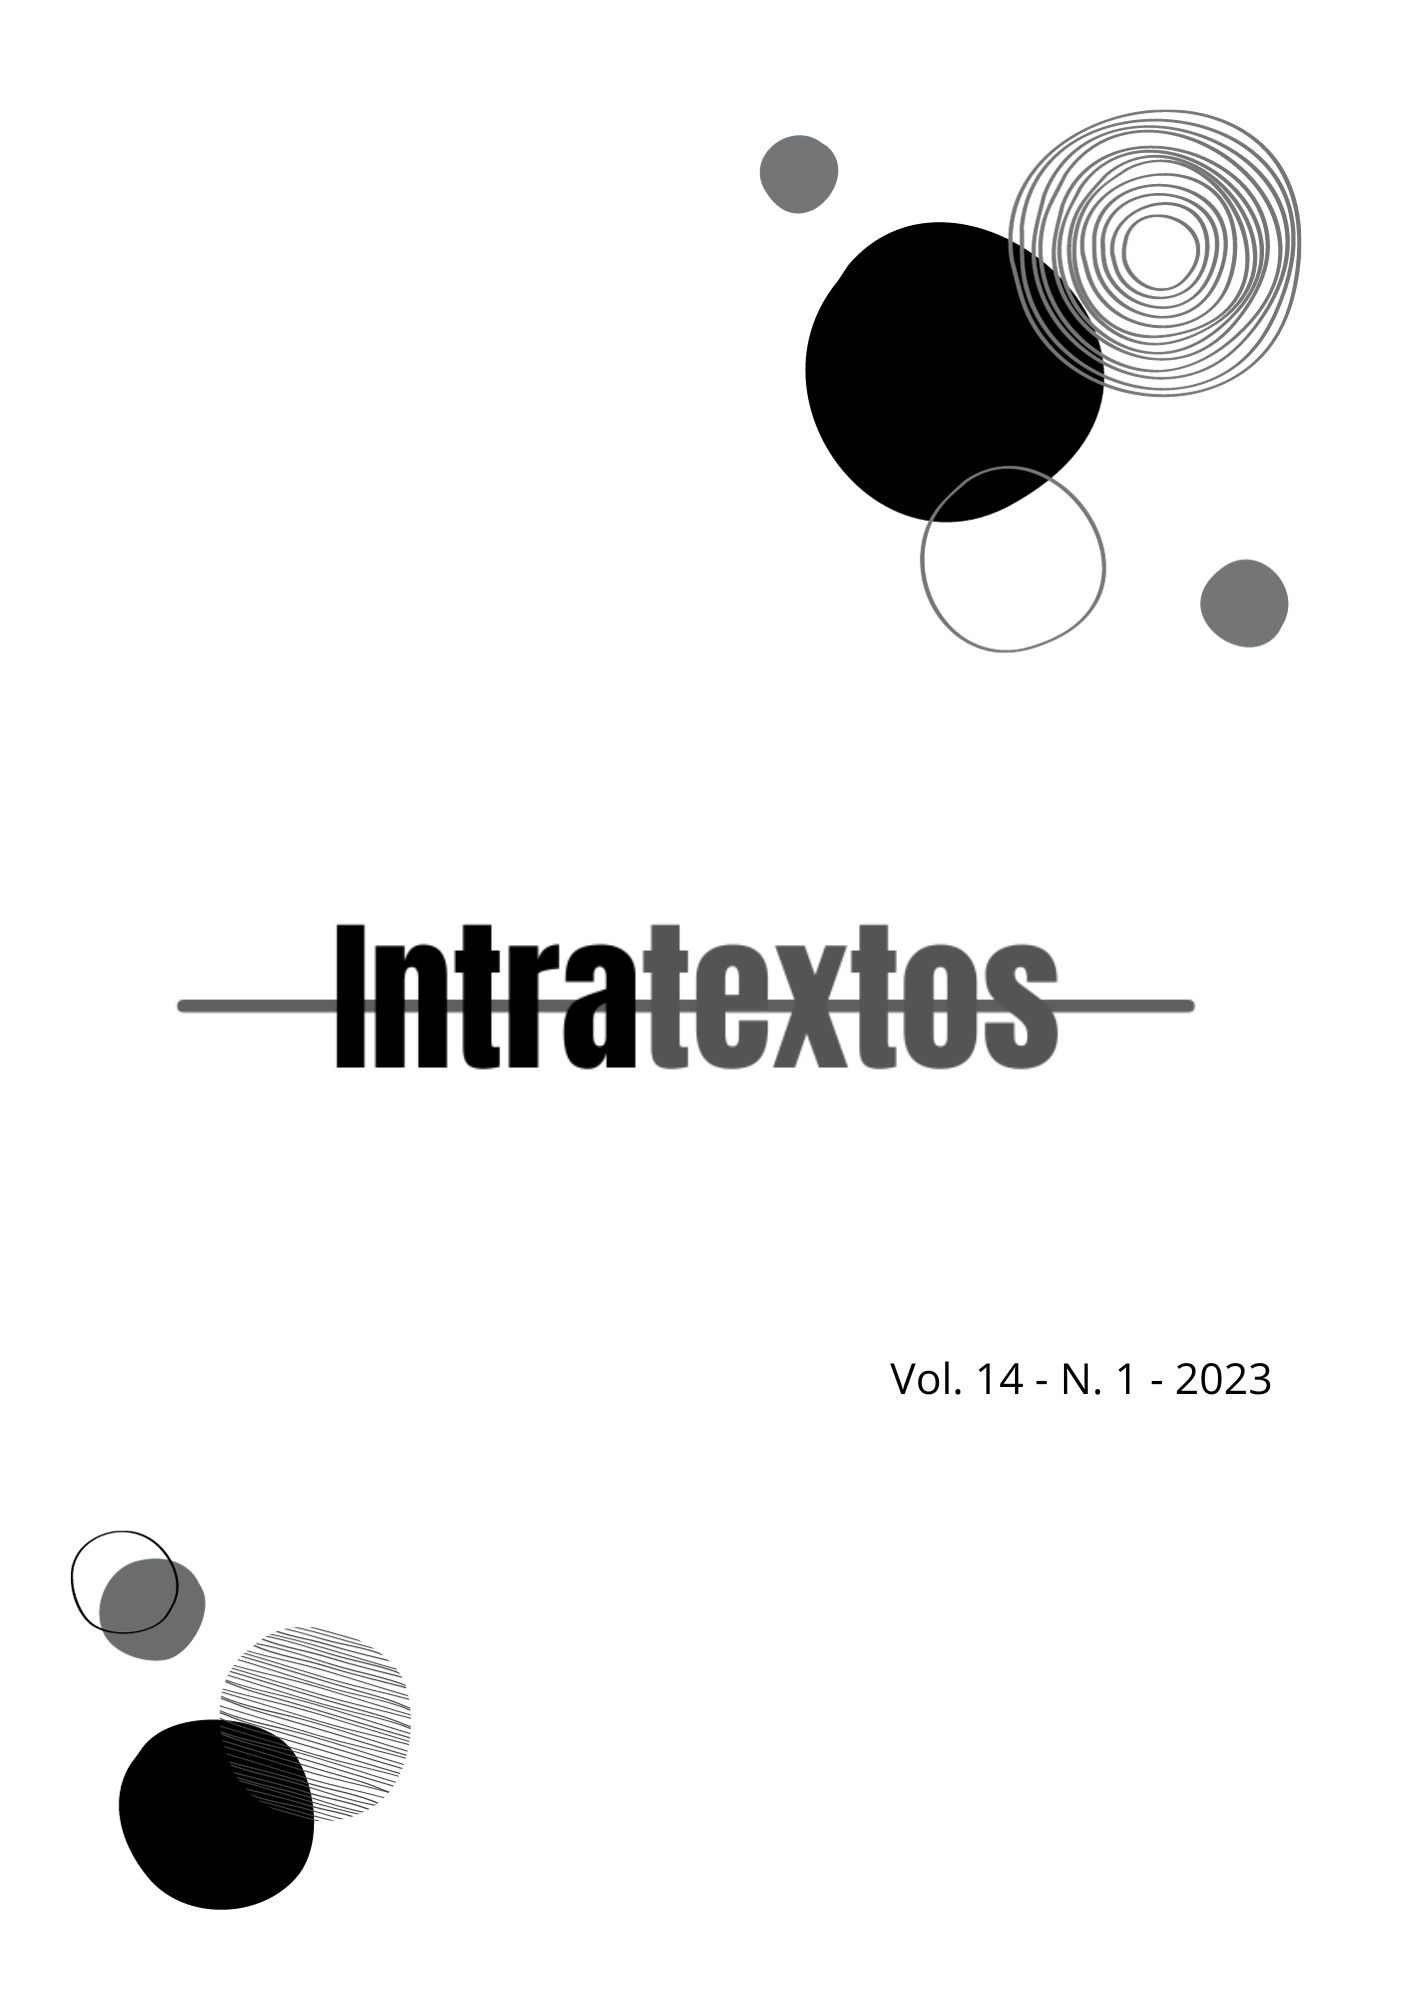 					Visualizar v. 14 n. 1 (2023): Revista Intratextos 
				